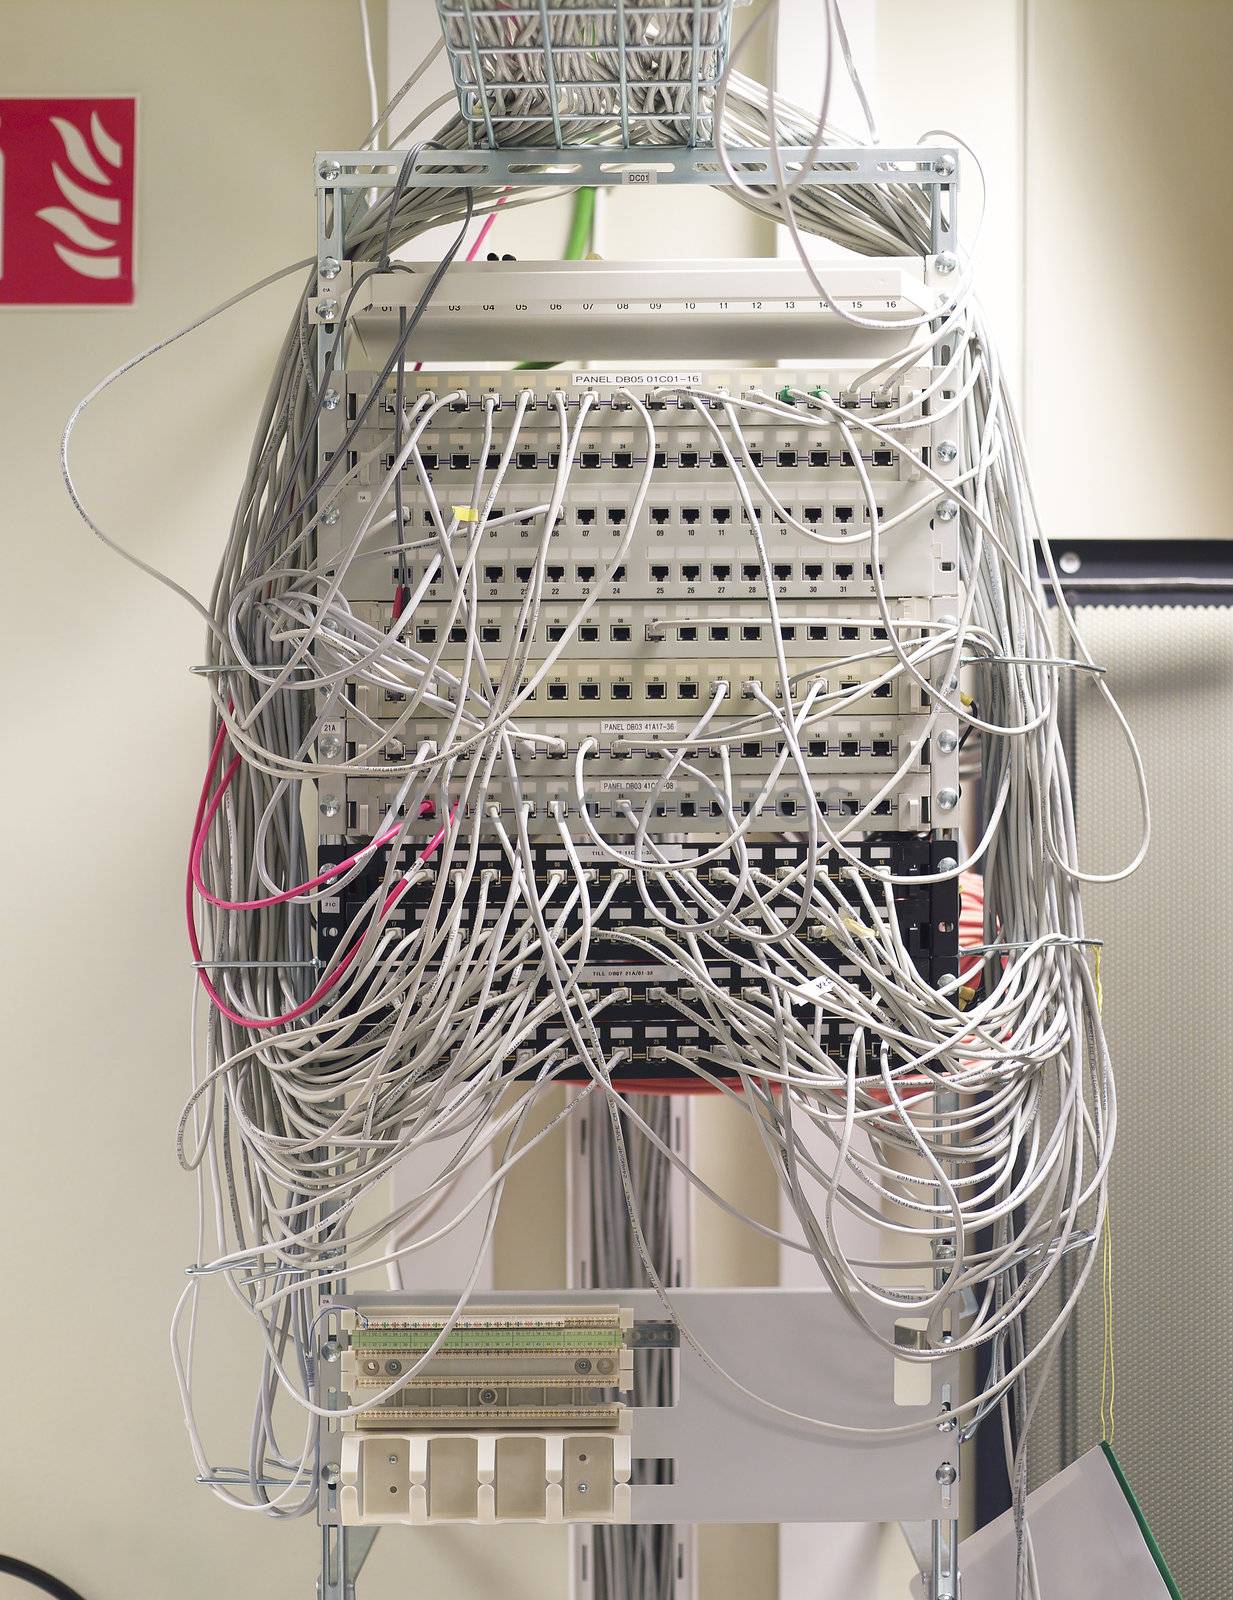 Cables by gemenacom